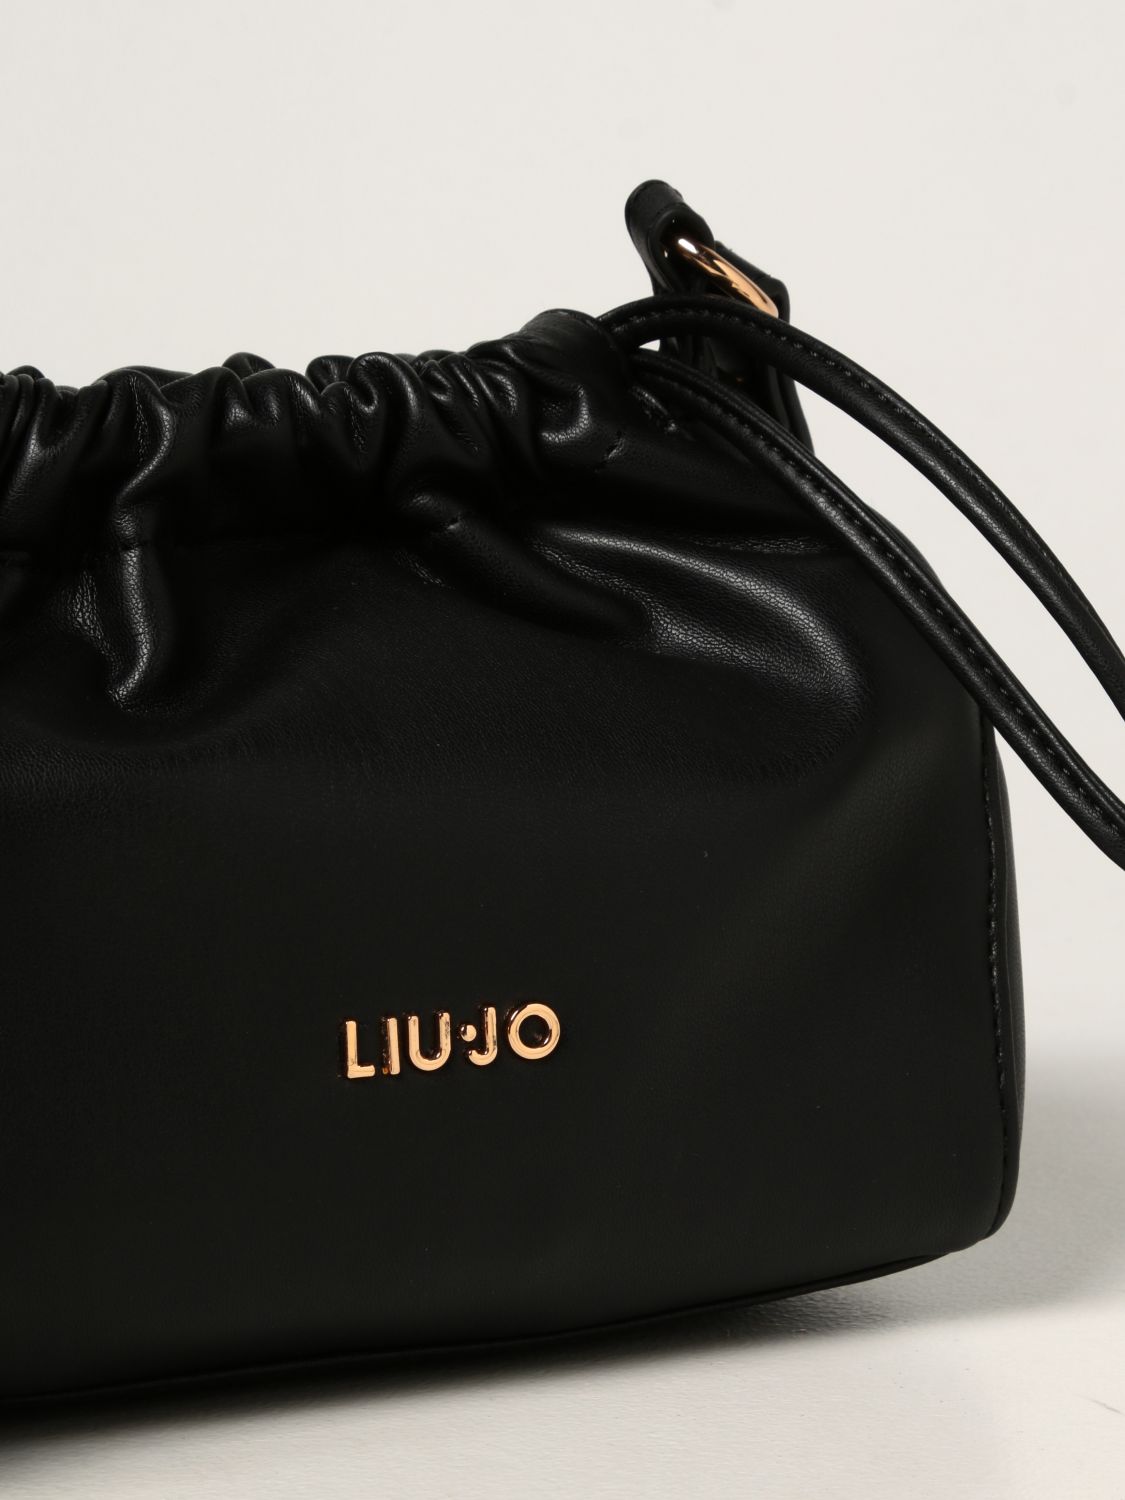 twintig functie Ongeschikt LIU JO: bag in synthetic leather | Bag Liu Jo Kids Black | Bag Liu Jo  GF1161E0002S GIGLIO.COM